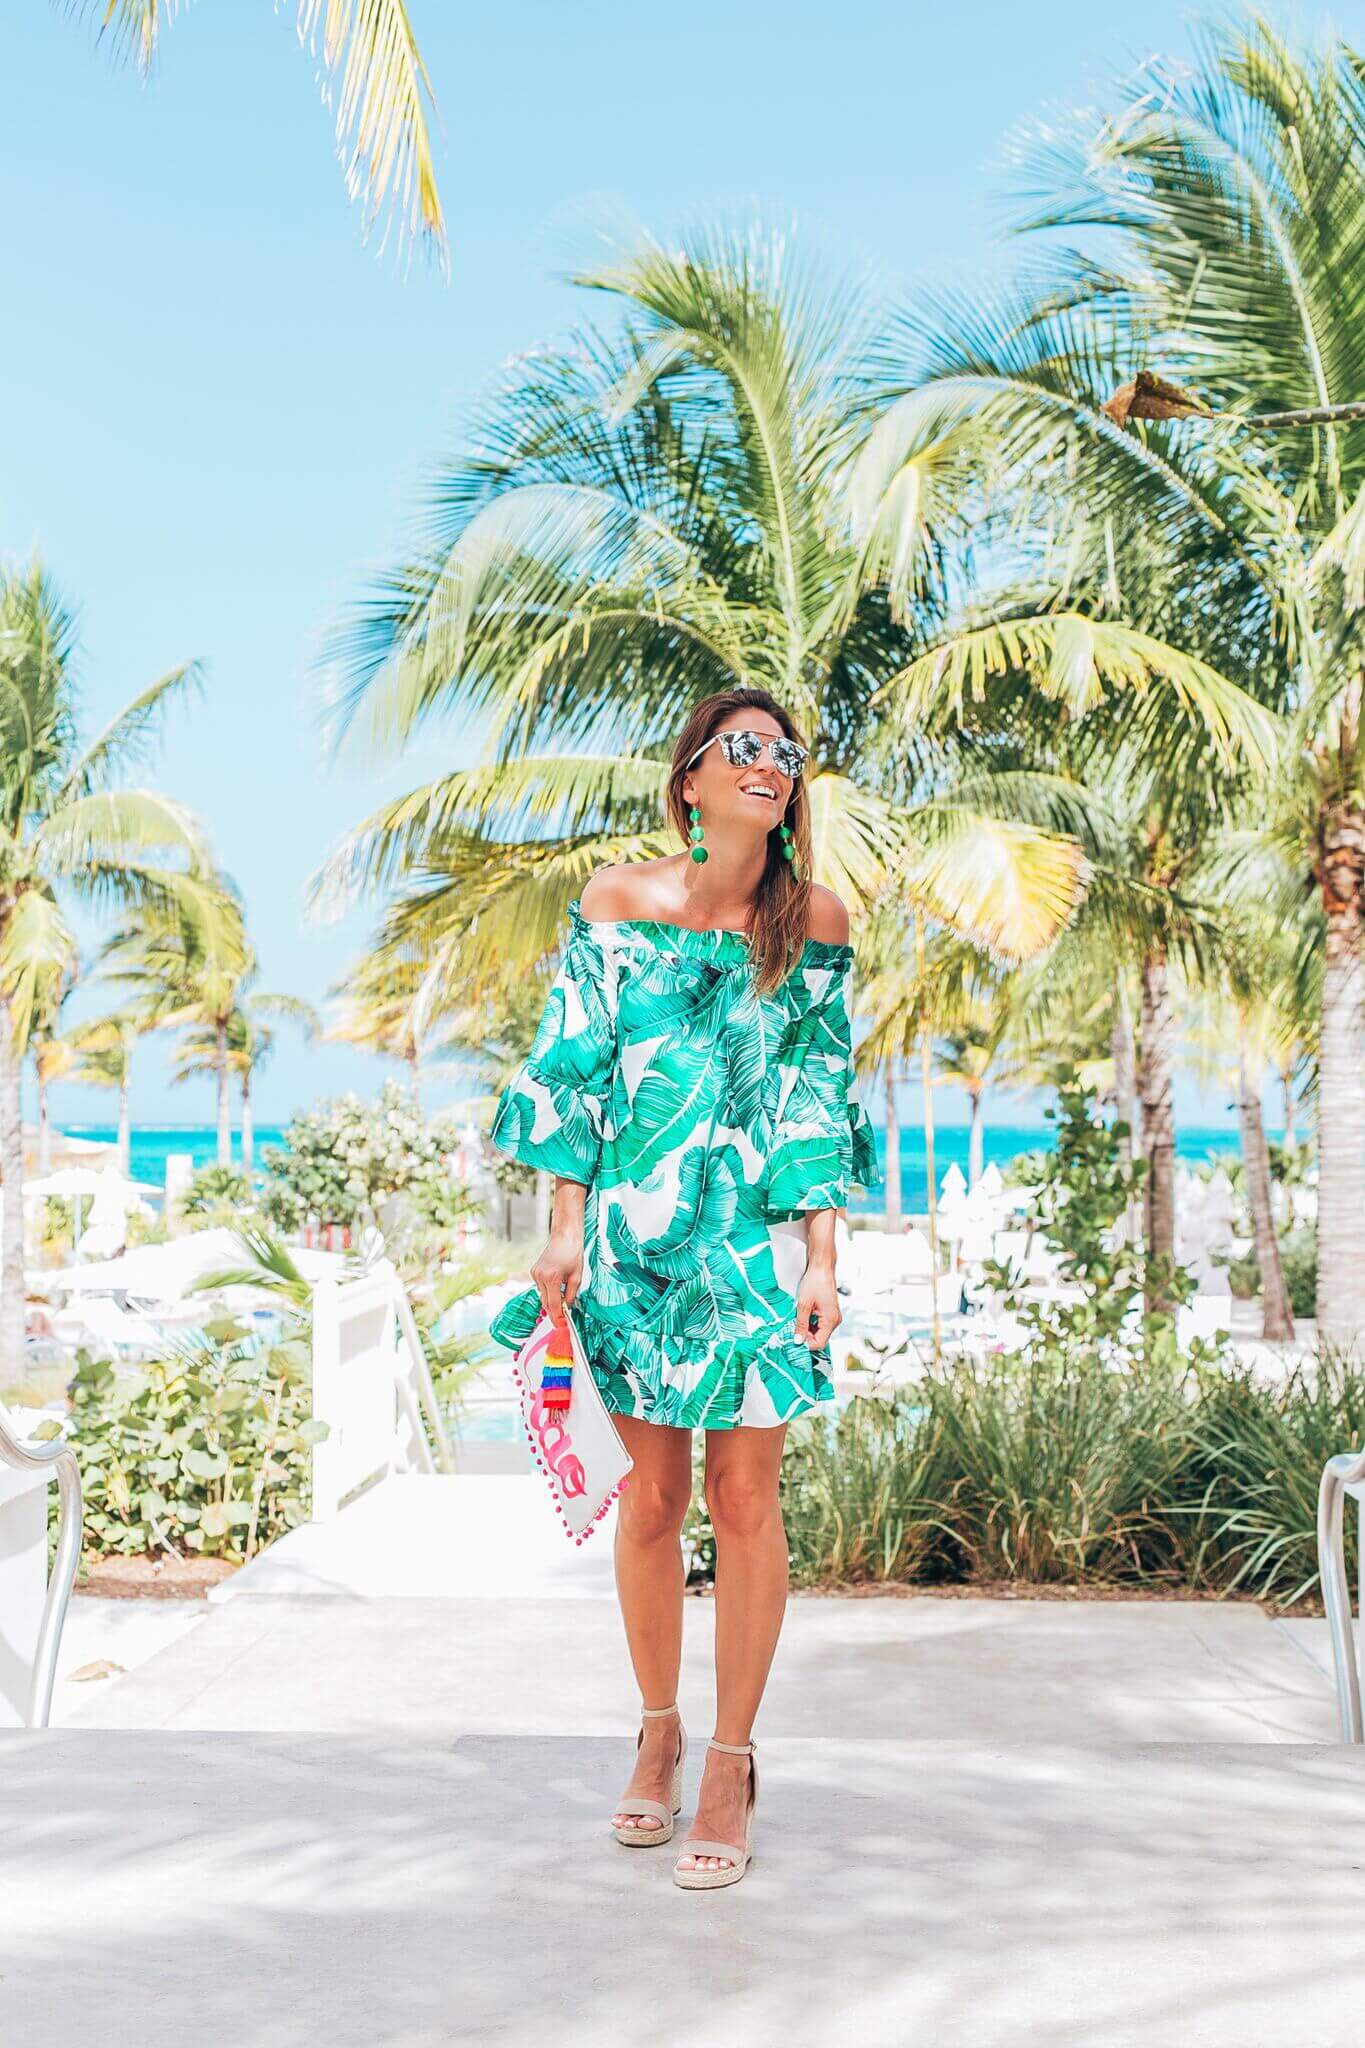 Palm print summer dress, ciao tassel and pom pom clutch, nude espadrilles, green drop earrings, dior so real sunglasses, mandy furnis sparkleshinylove, baha mar resort style